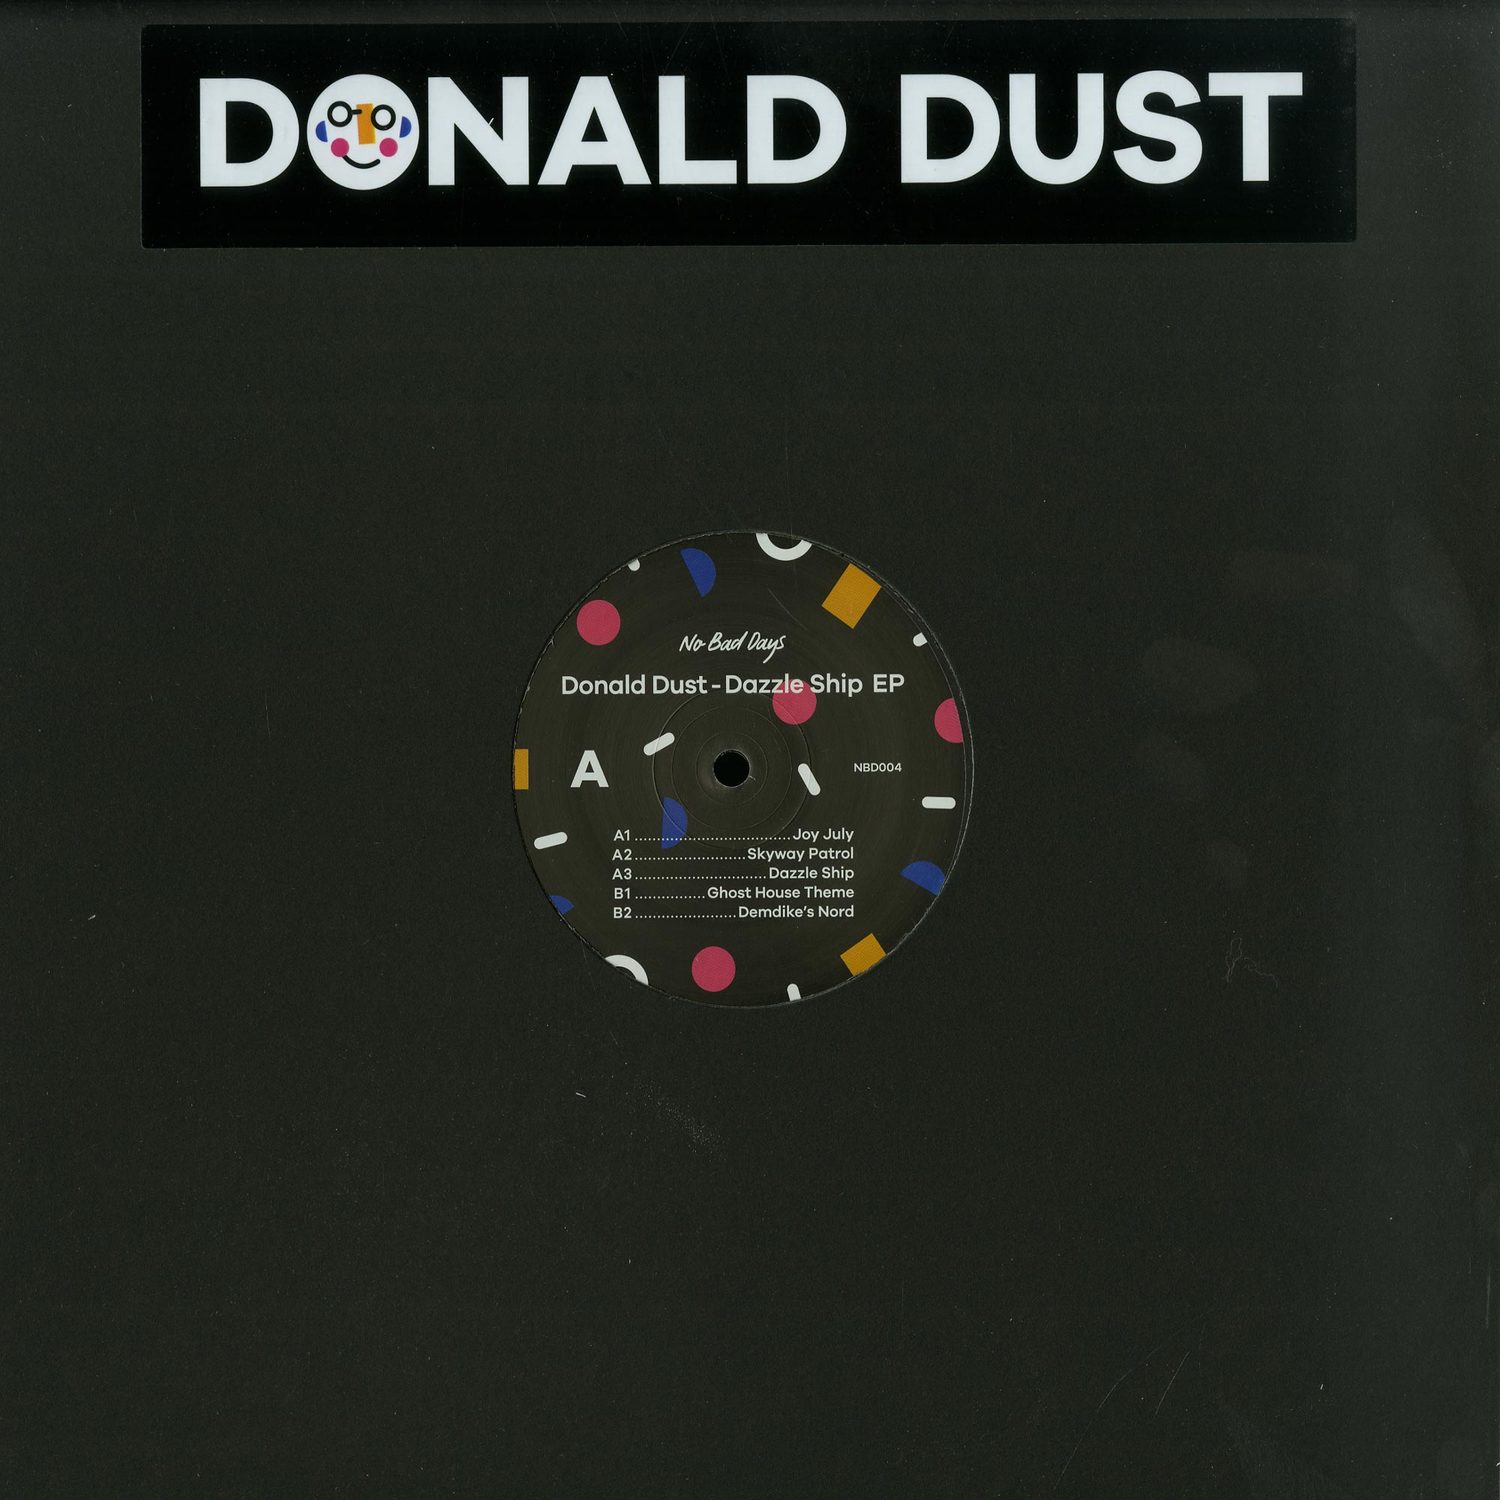 Donald Dust - DAZZLE SHIP EP